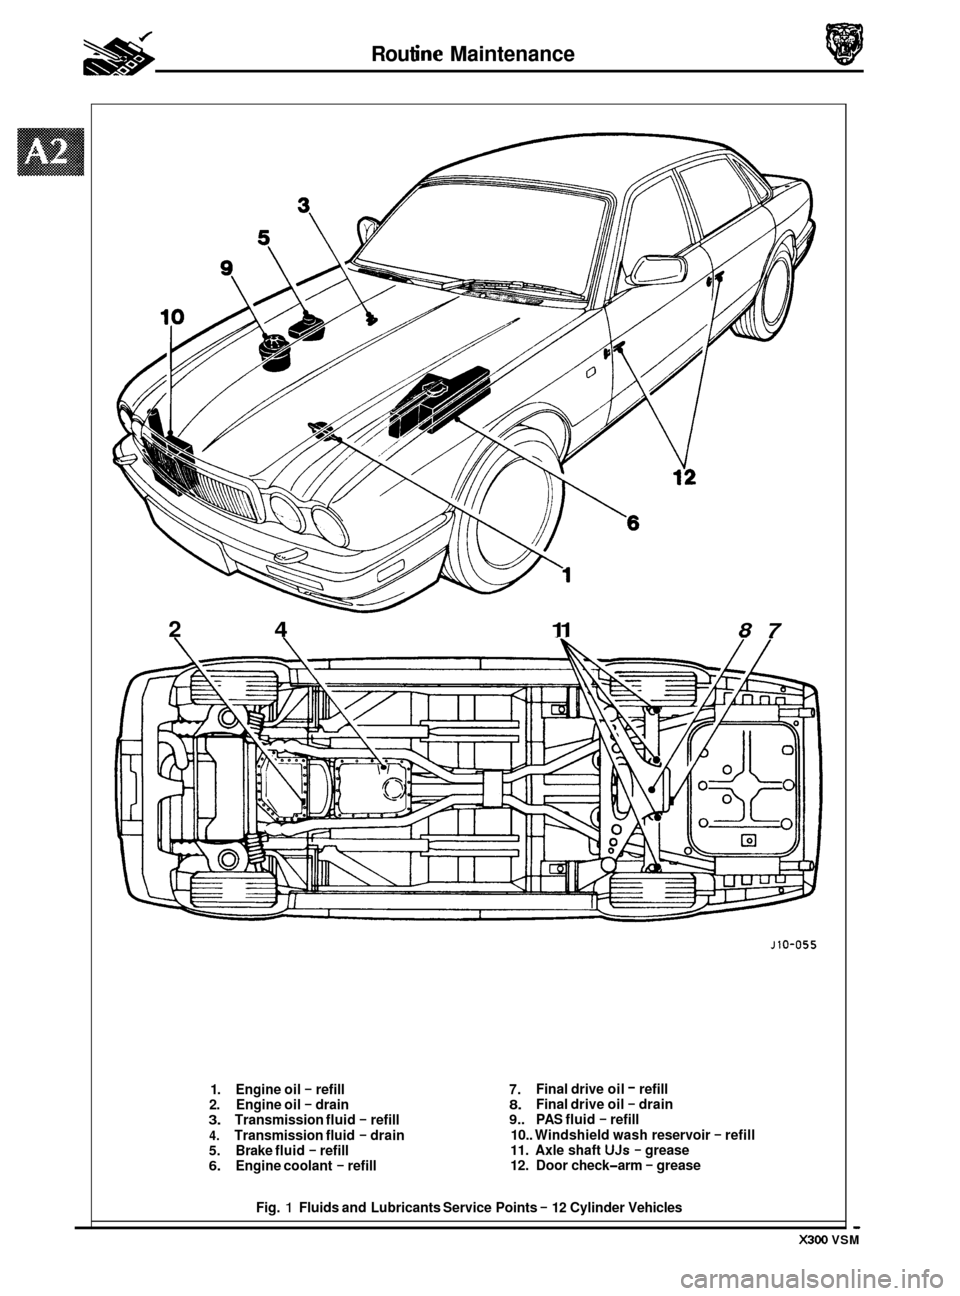 JAGUAR XJ6 1994 2.G Workshop Manual 2 4 11 87 
* * Rout ine Maintenance 
- X300 VSM 
1. Engine  oil - refill 
2.  Engine  oil - drain 3. Transmission  fluid - refill 
4. Transmission fluid - drain 5. Brake fluid - refill 6. Engine coola